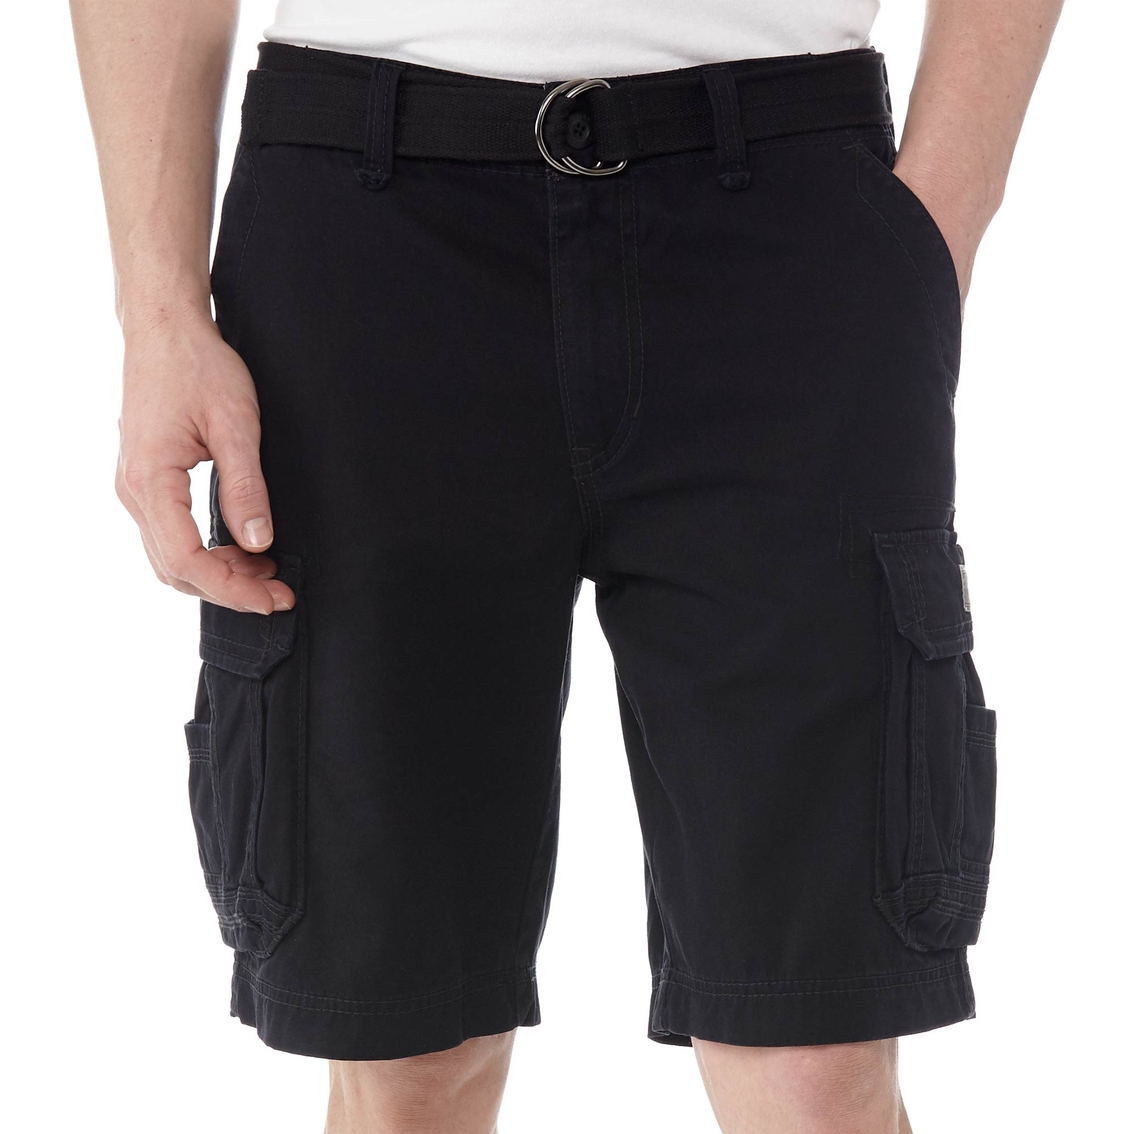 Unionbay Survivor Cargo Short With Belt | Shorts | Clothing ...